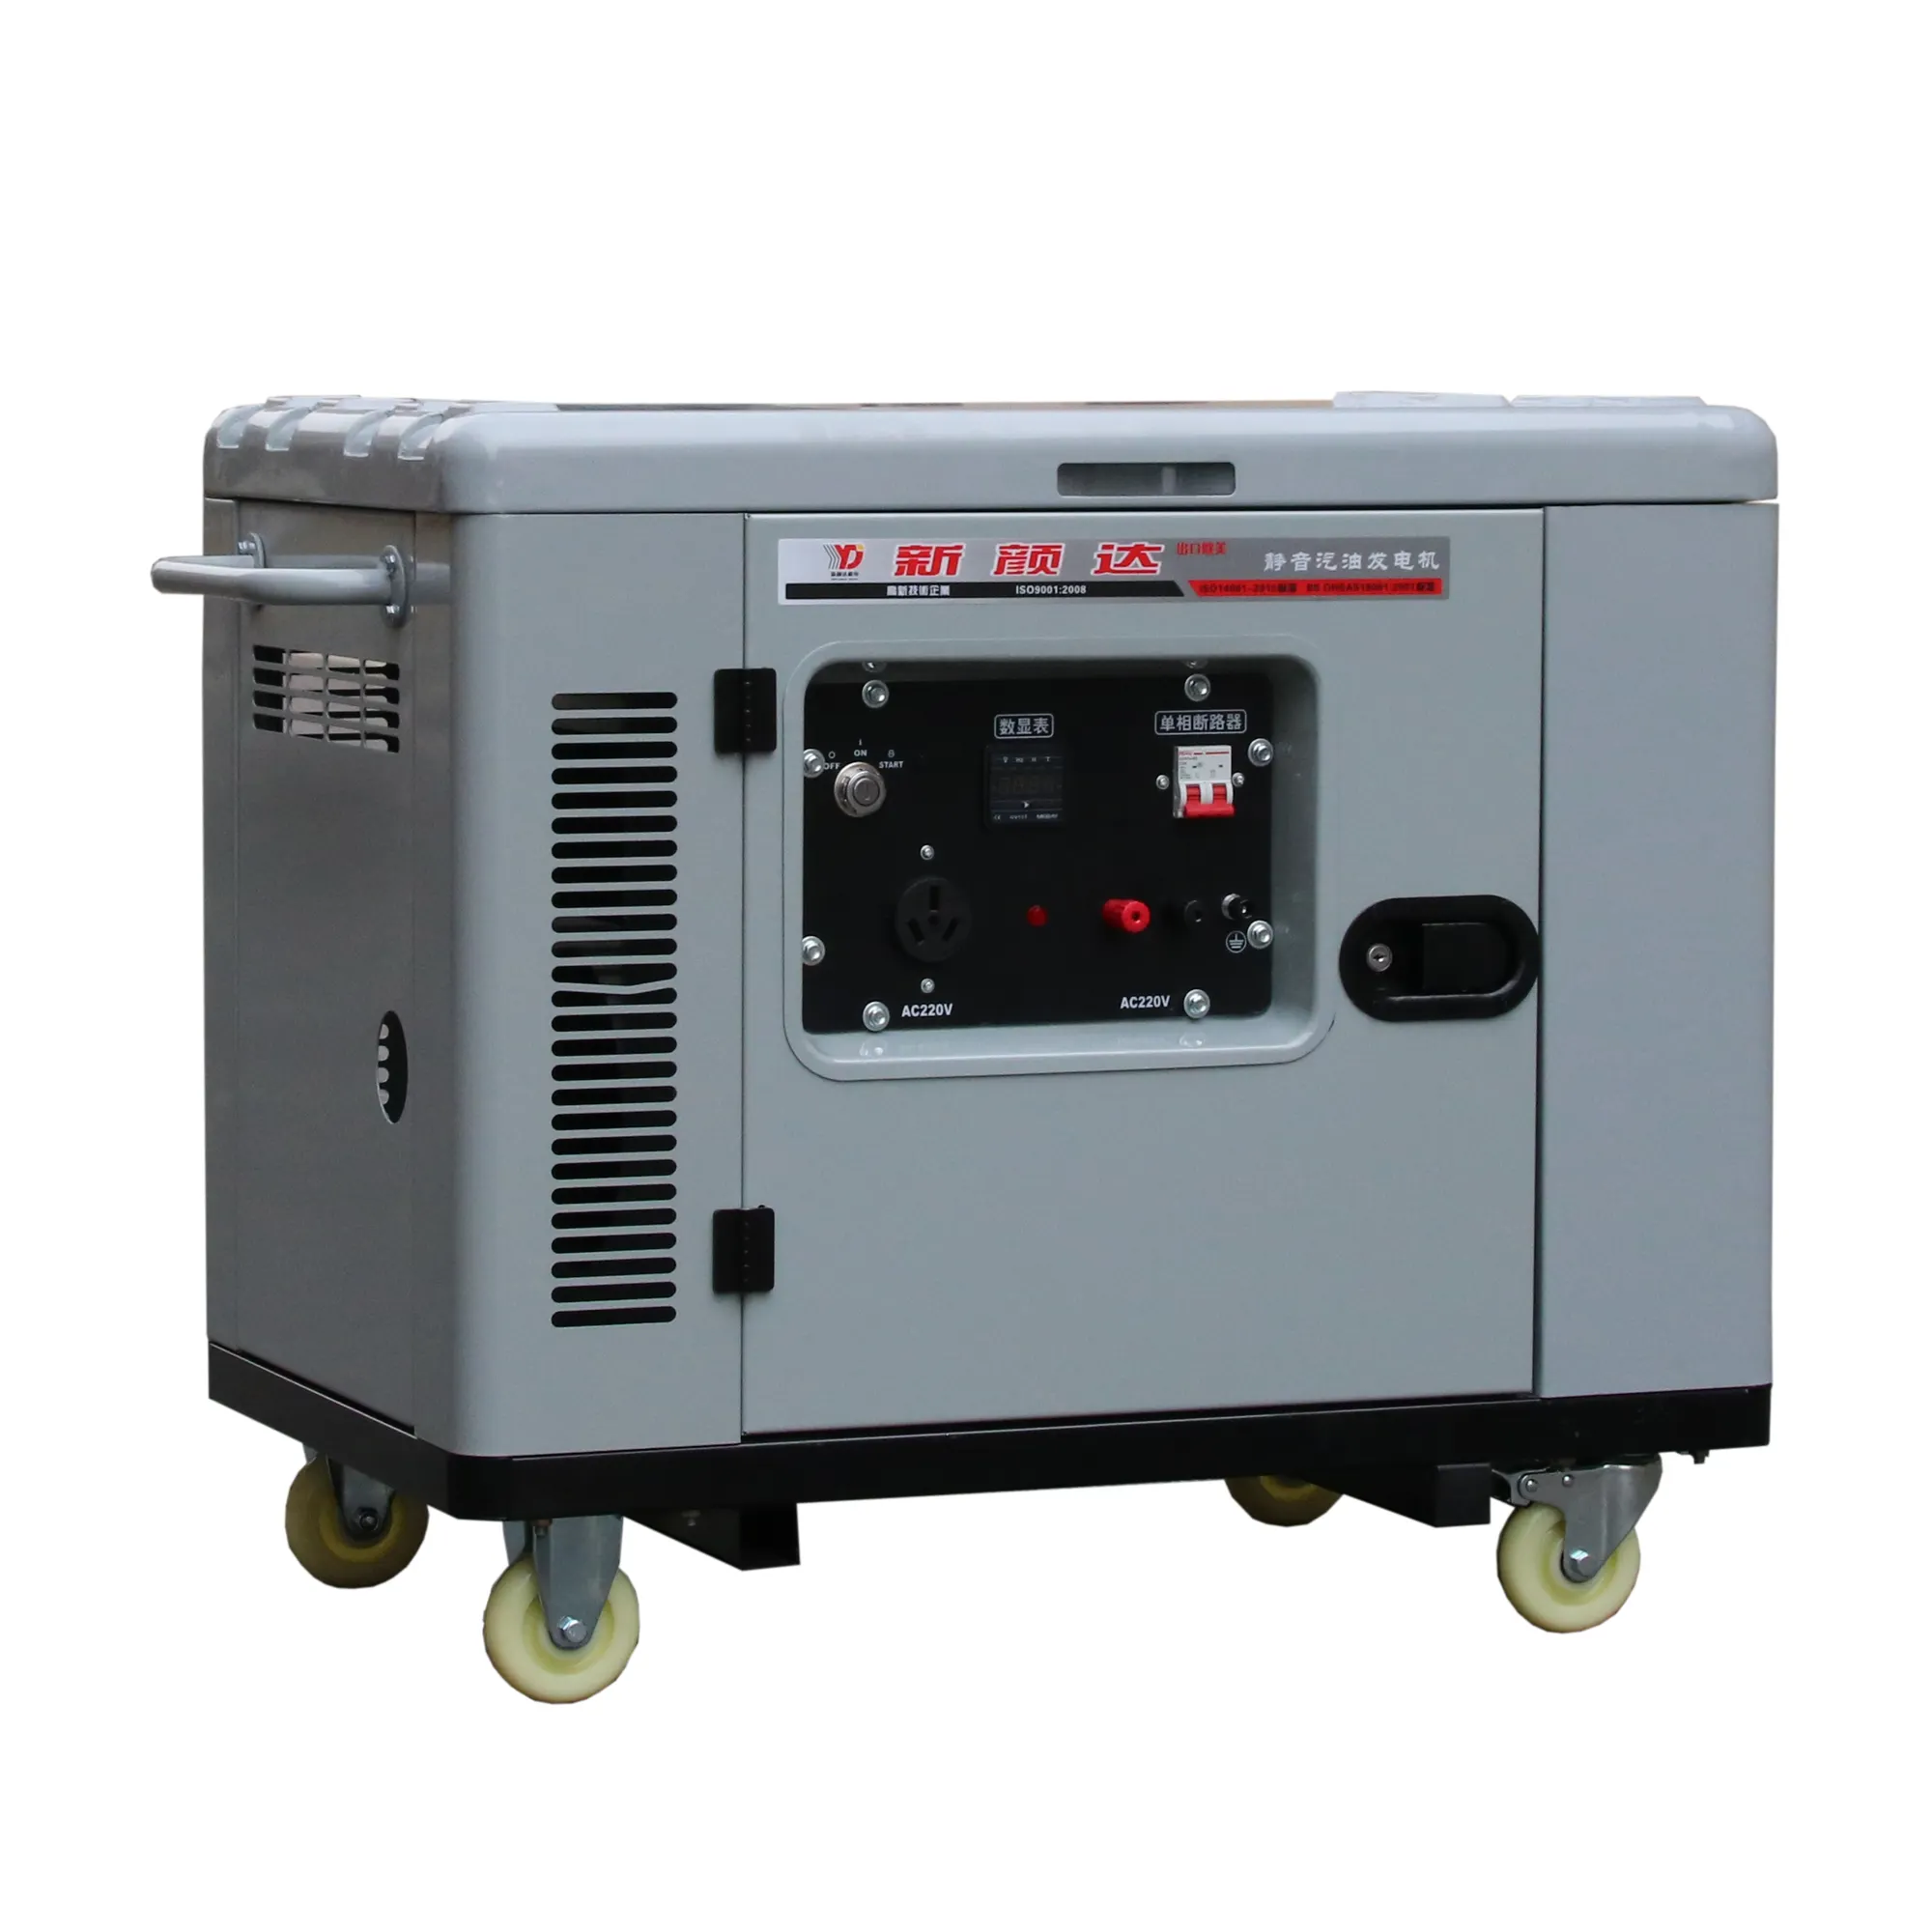 Hot sell gasoline generator silent 8500W for 110V 220V 230V 240V 400V standby power